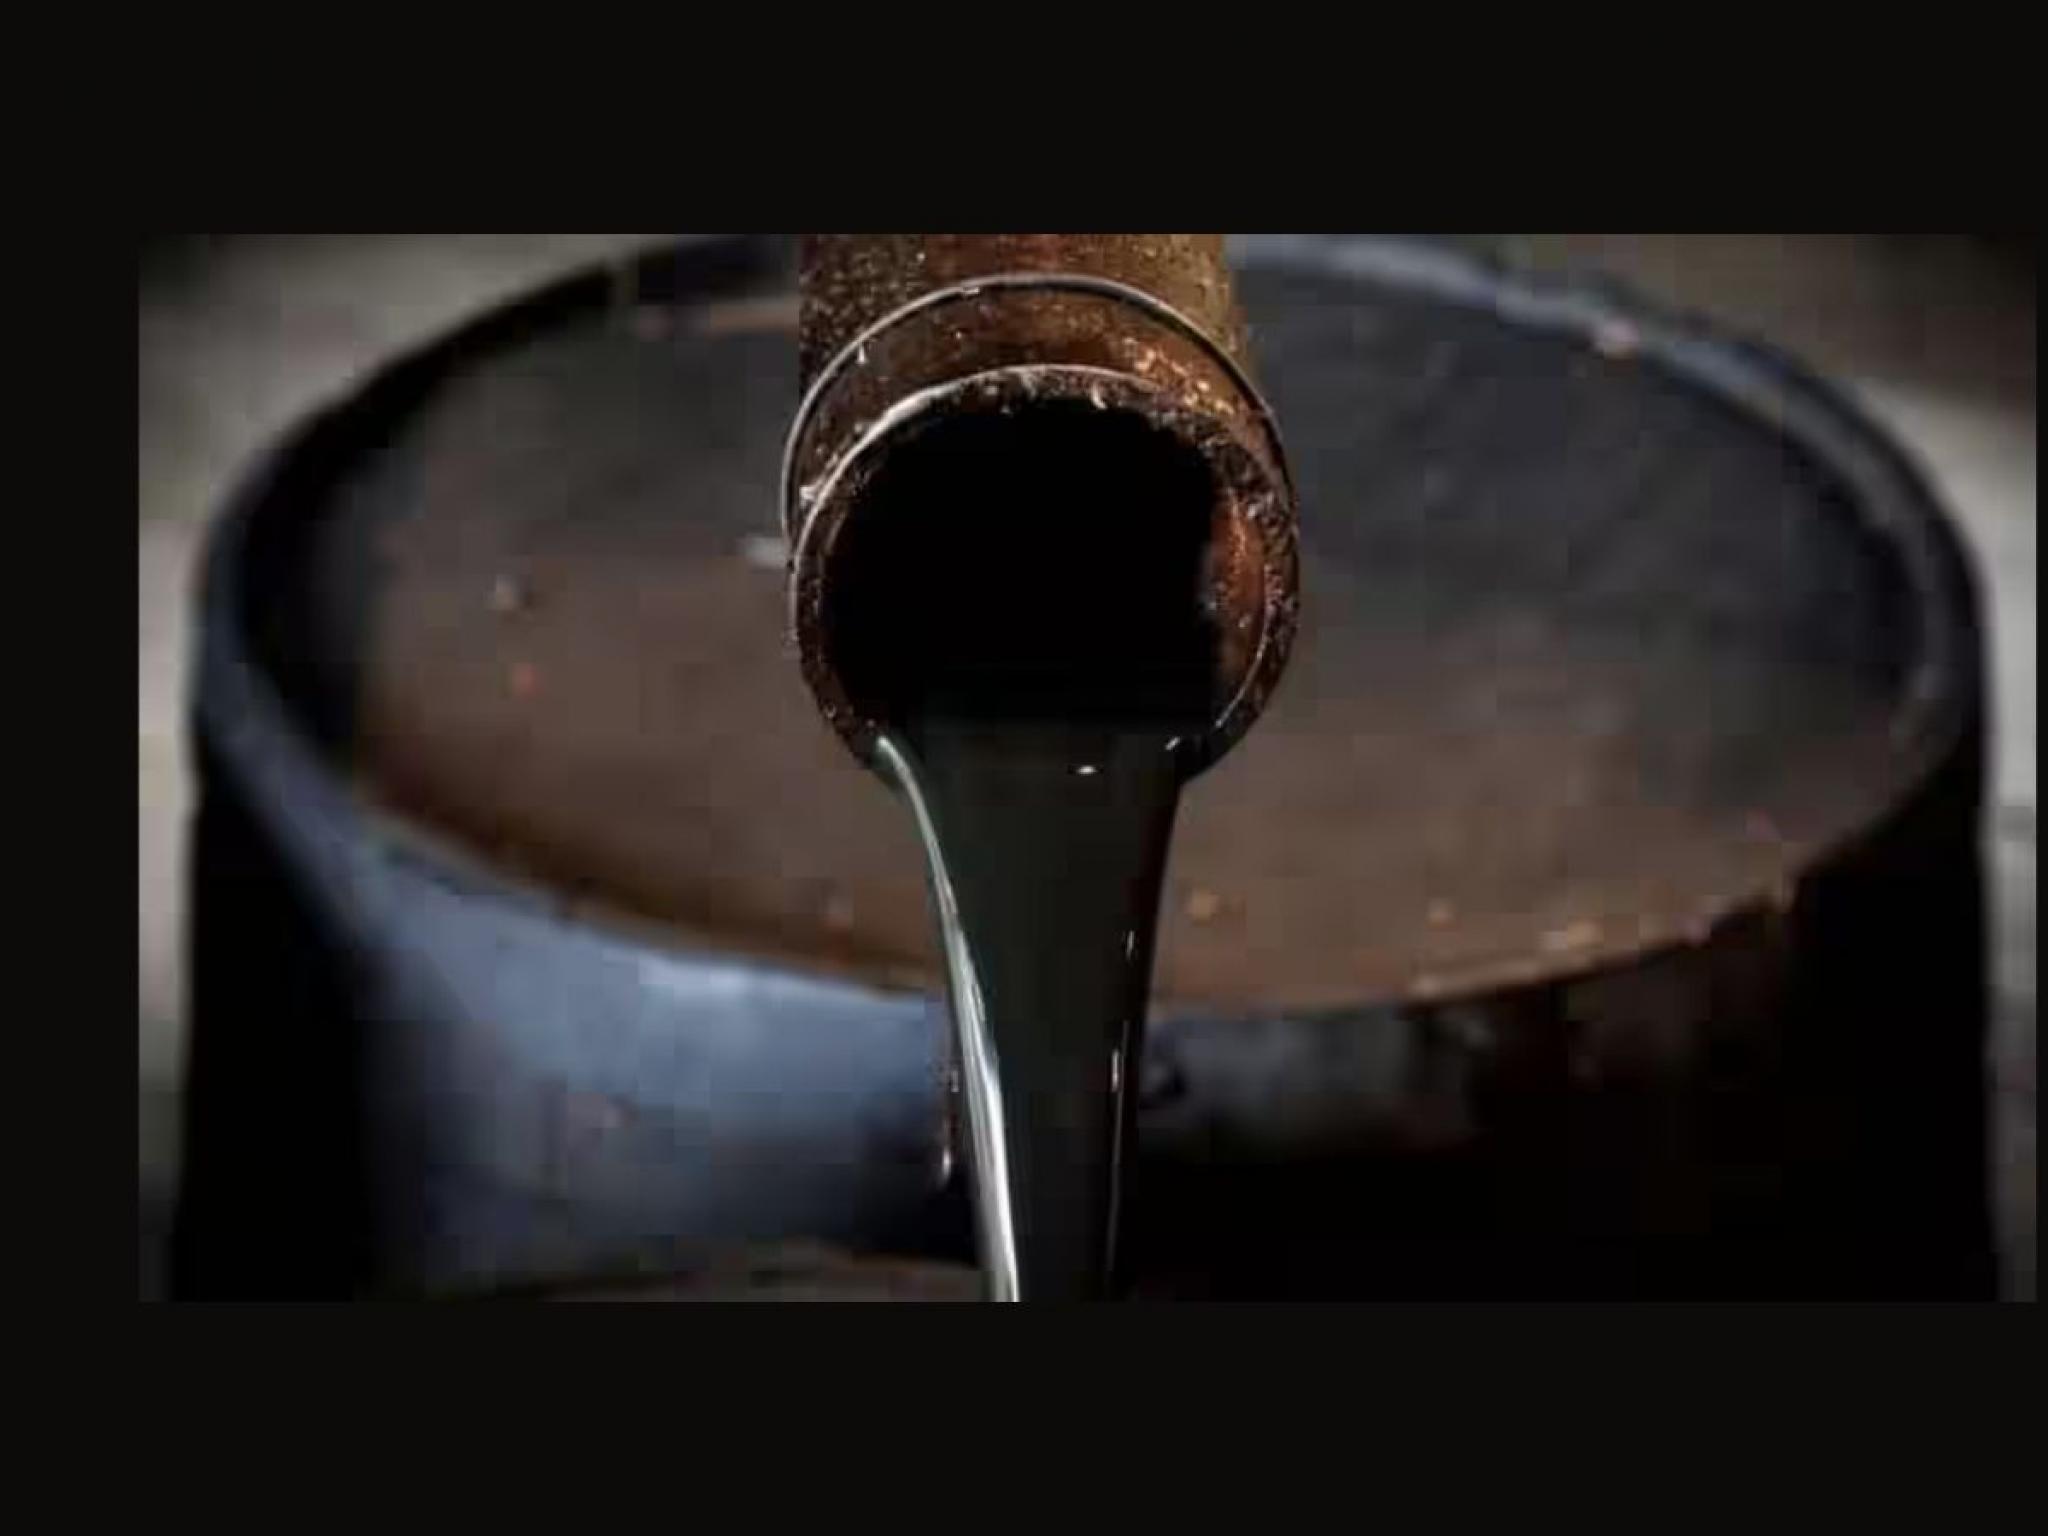  crude-oil-rises-sharply-foot-locker-shares-plunge 